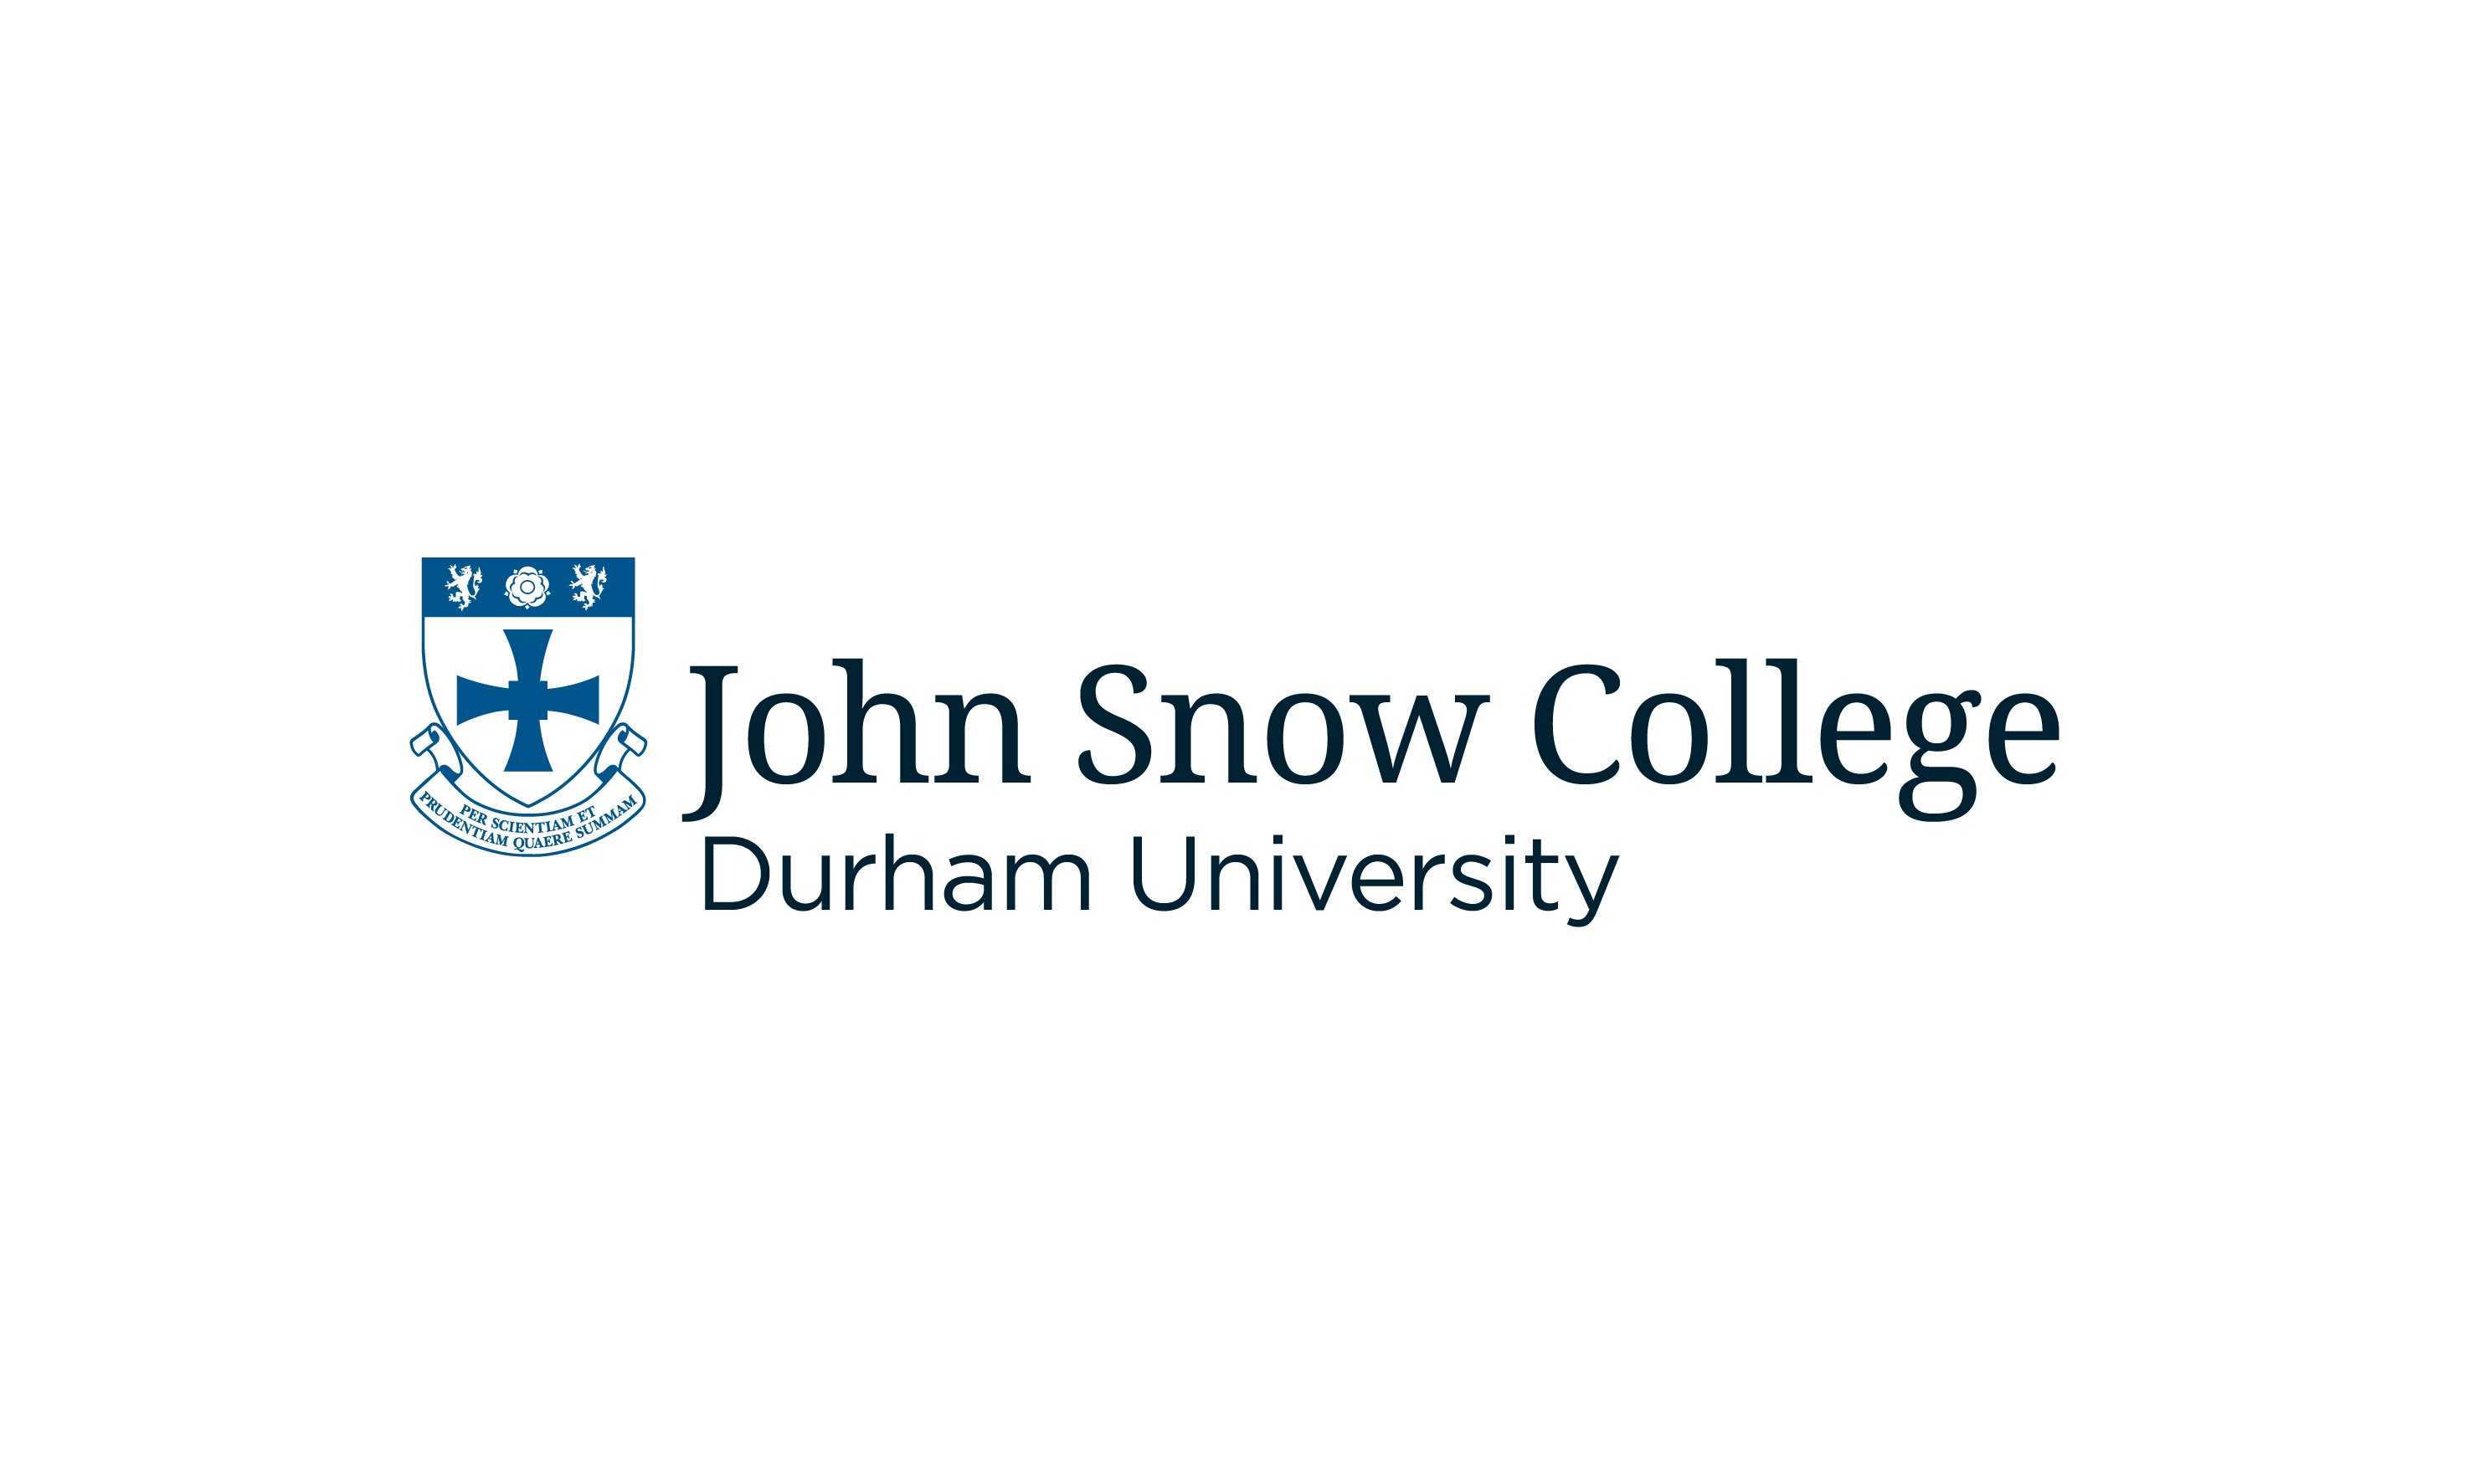 John Snow College Tie - JCR member